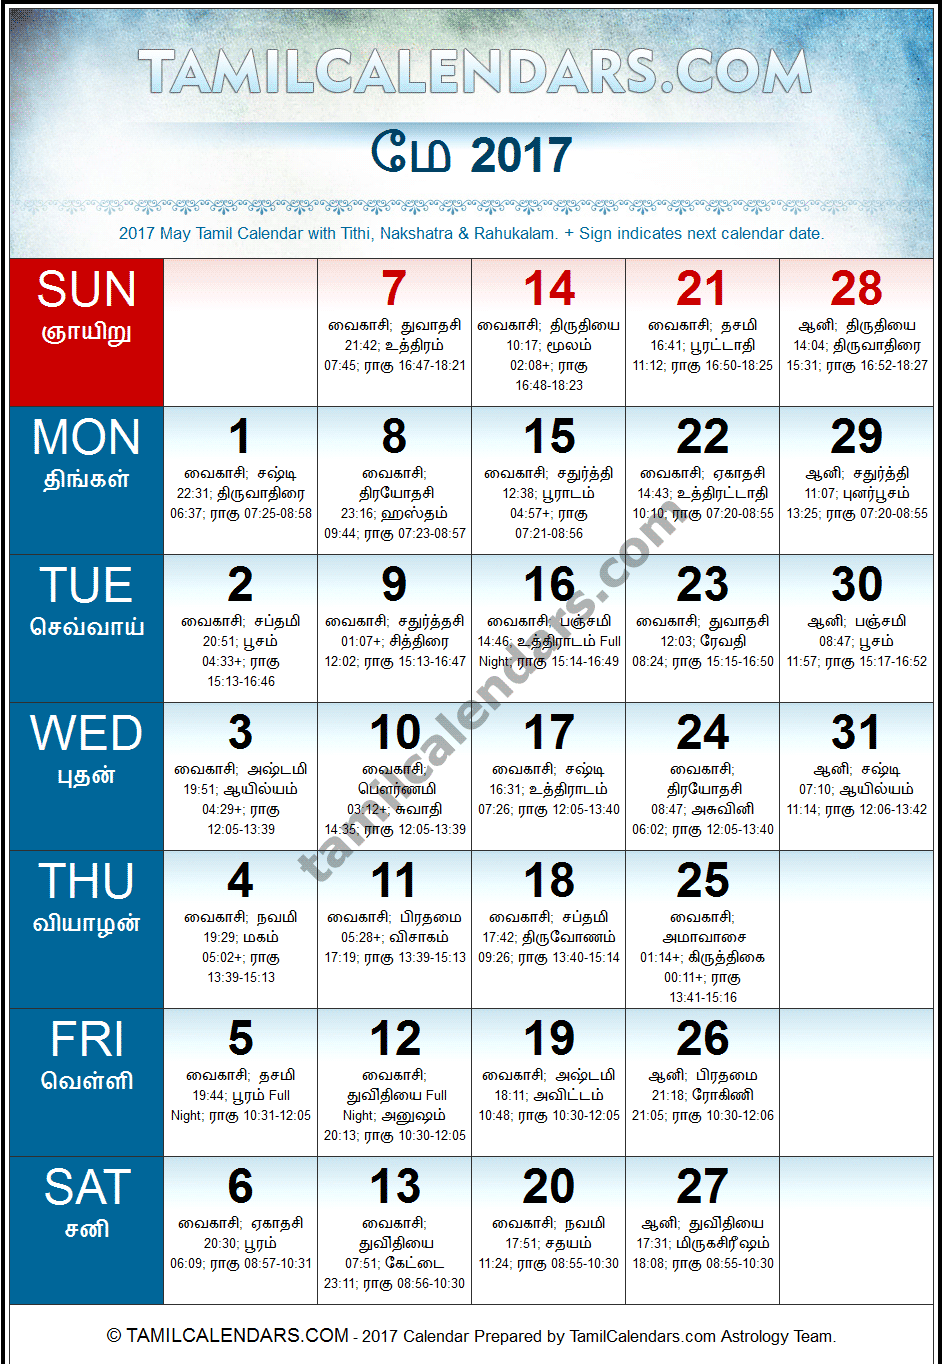 May 2017 Tamil Calendar